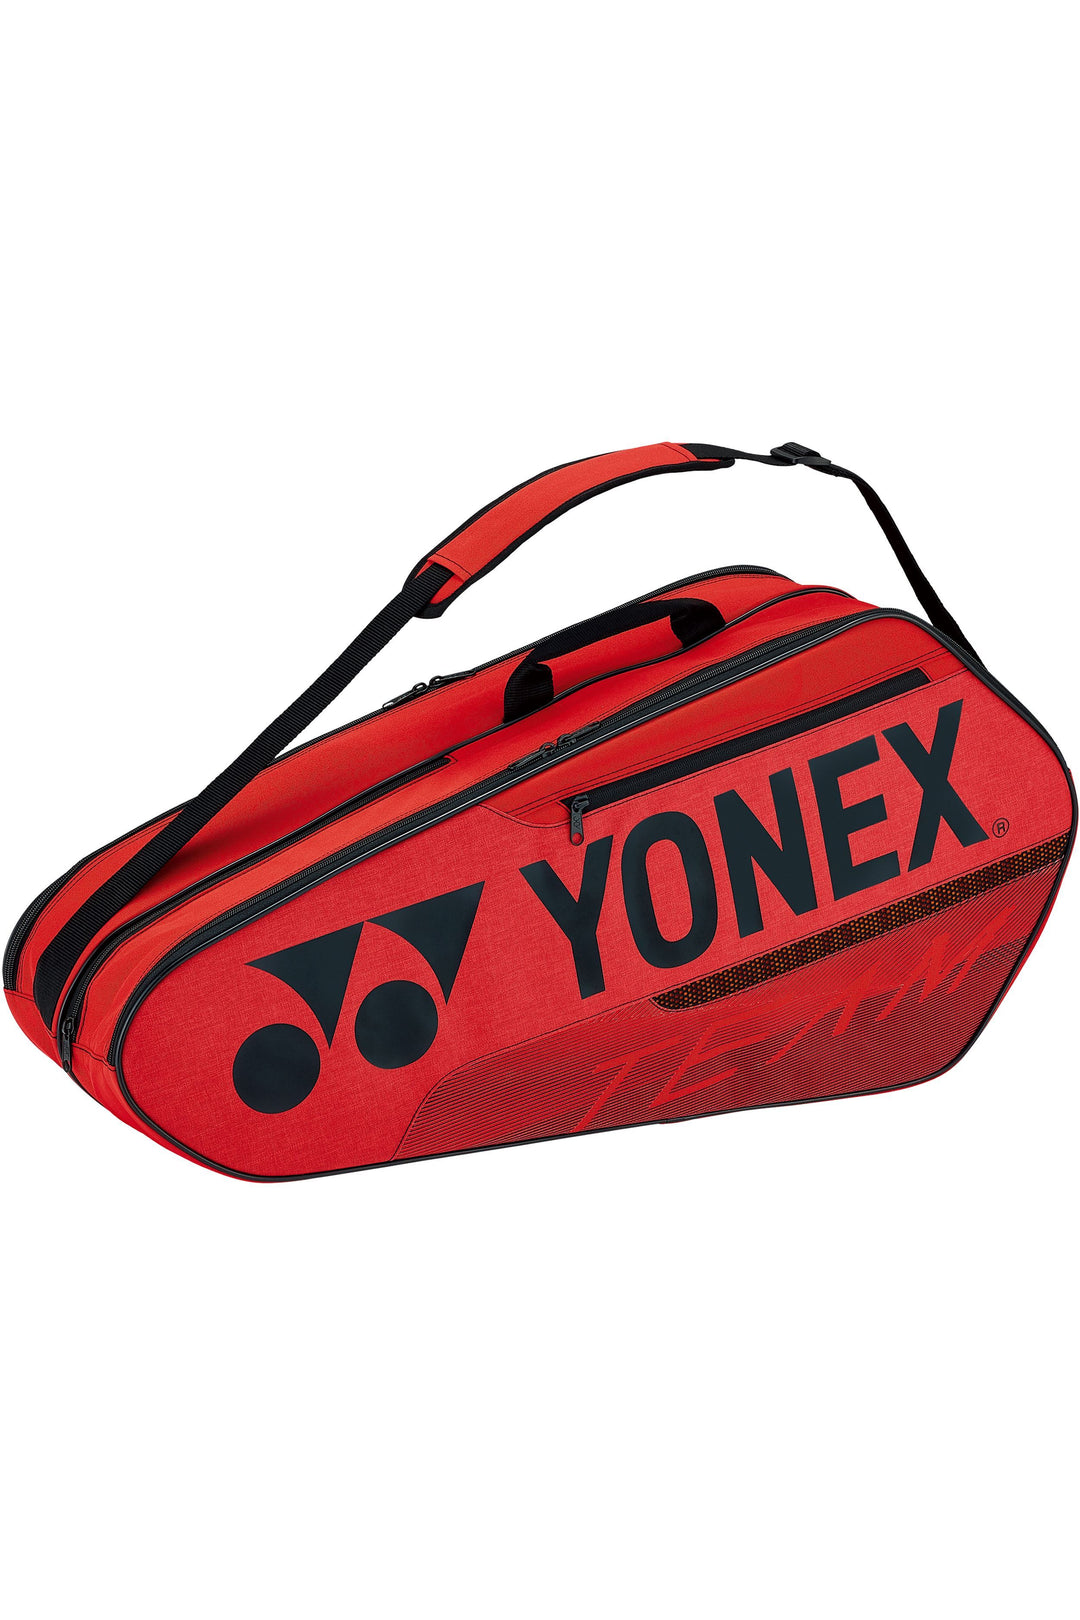 Yonex BAG42126EX Team 6-Racquet bag Bags Yonex Black/Red 